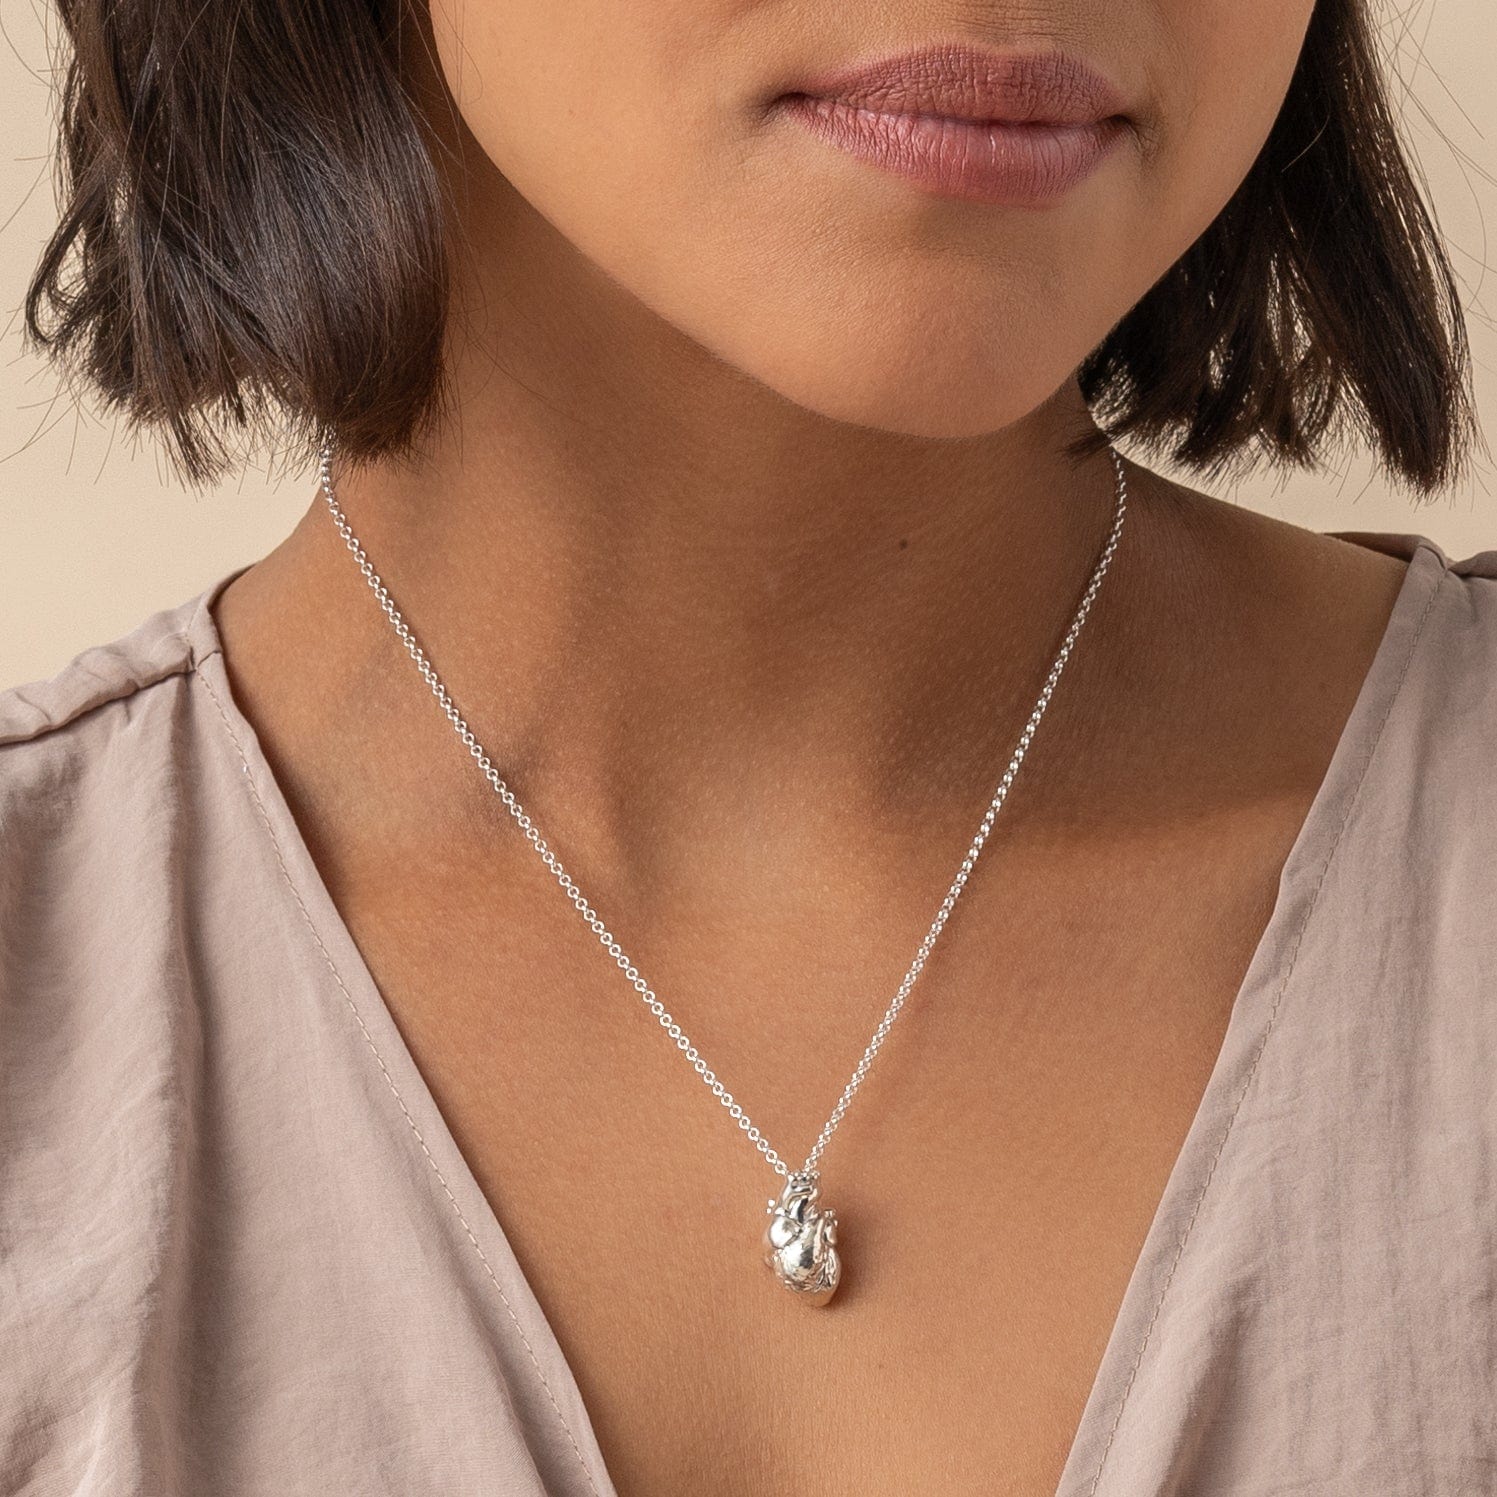 Silver Heart Pendant Chain Necklace Silver Pendant 